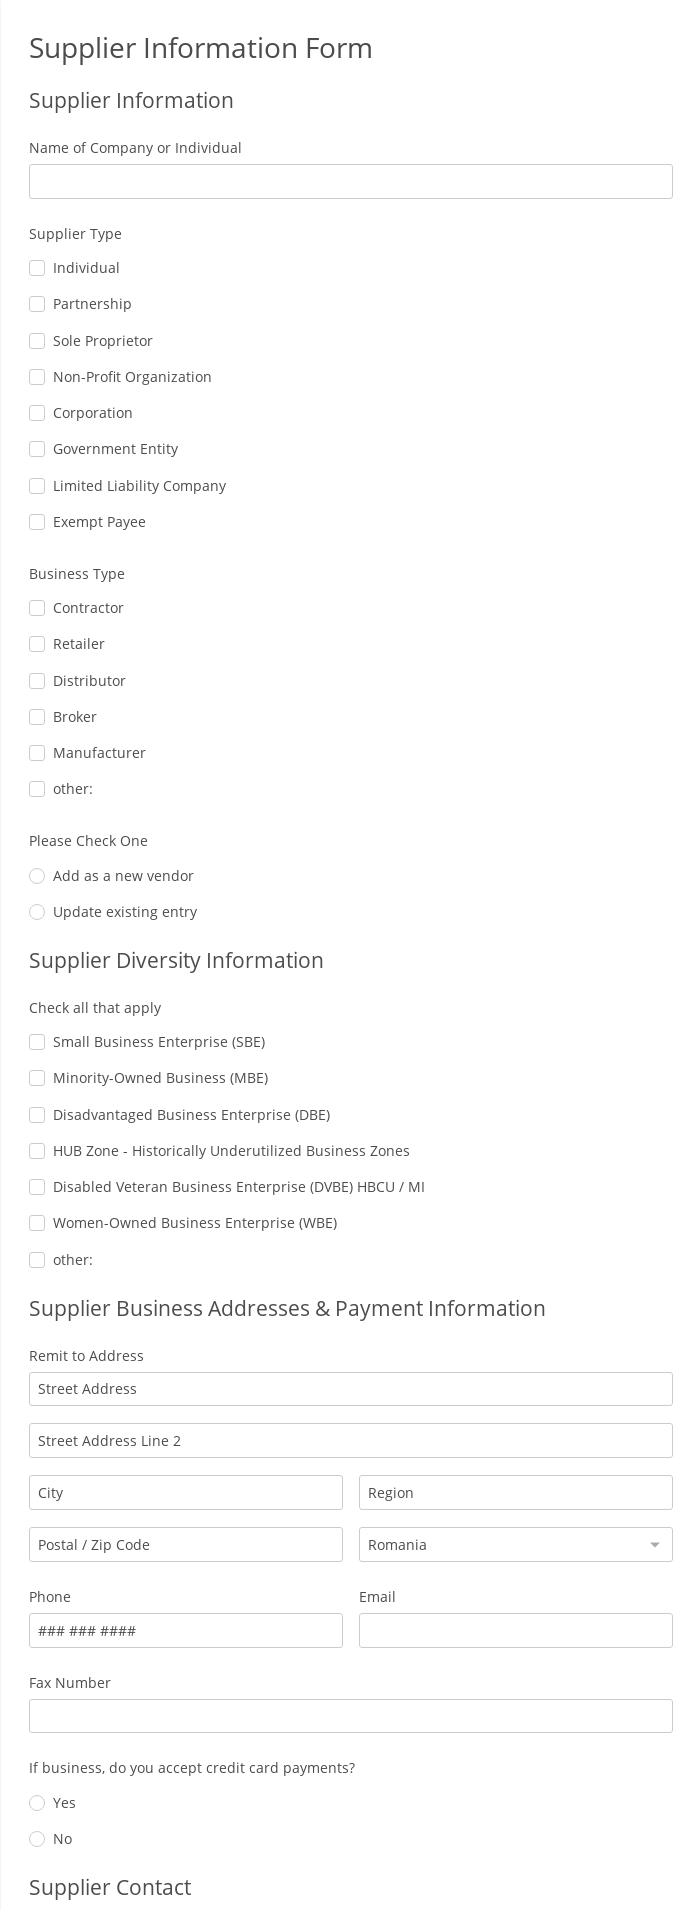 Supplier Information Form